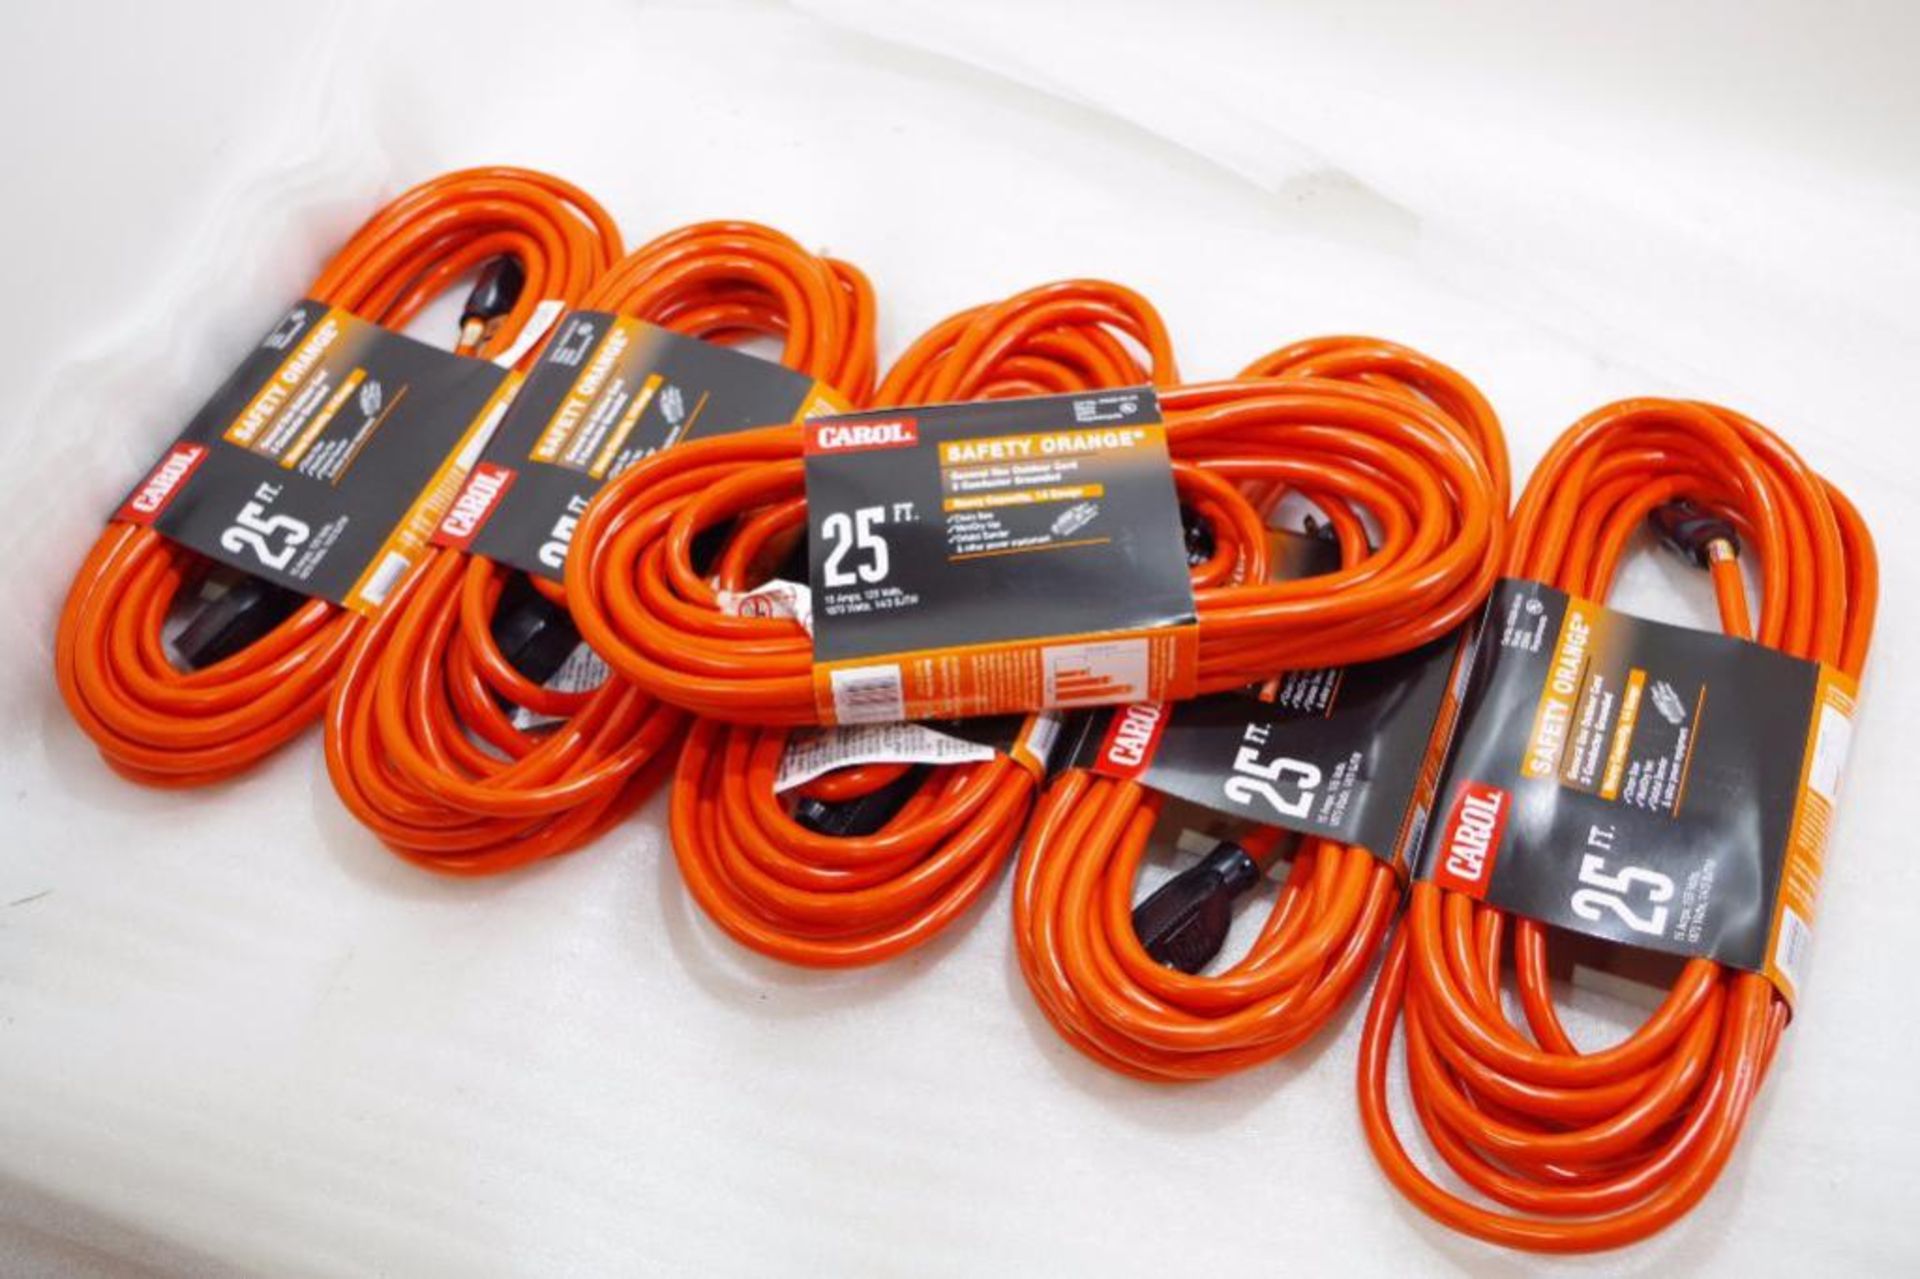 [6] UNUSED CAROL 25' Safety Orange 15A, 125V, 14 Gauge, 3-Conductor Extension Cords - Image 2 of 3